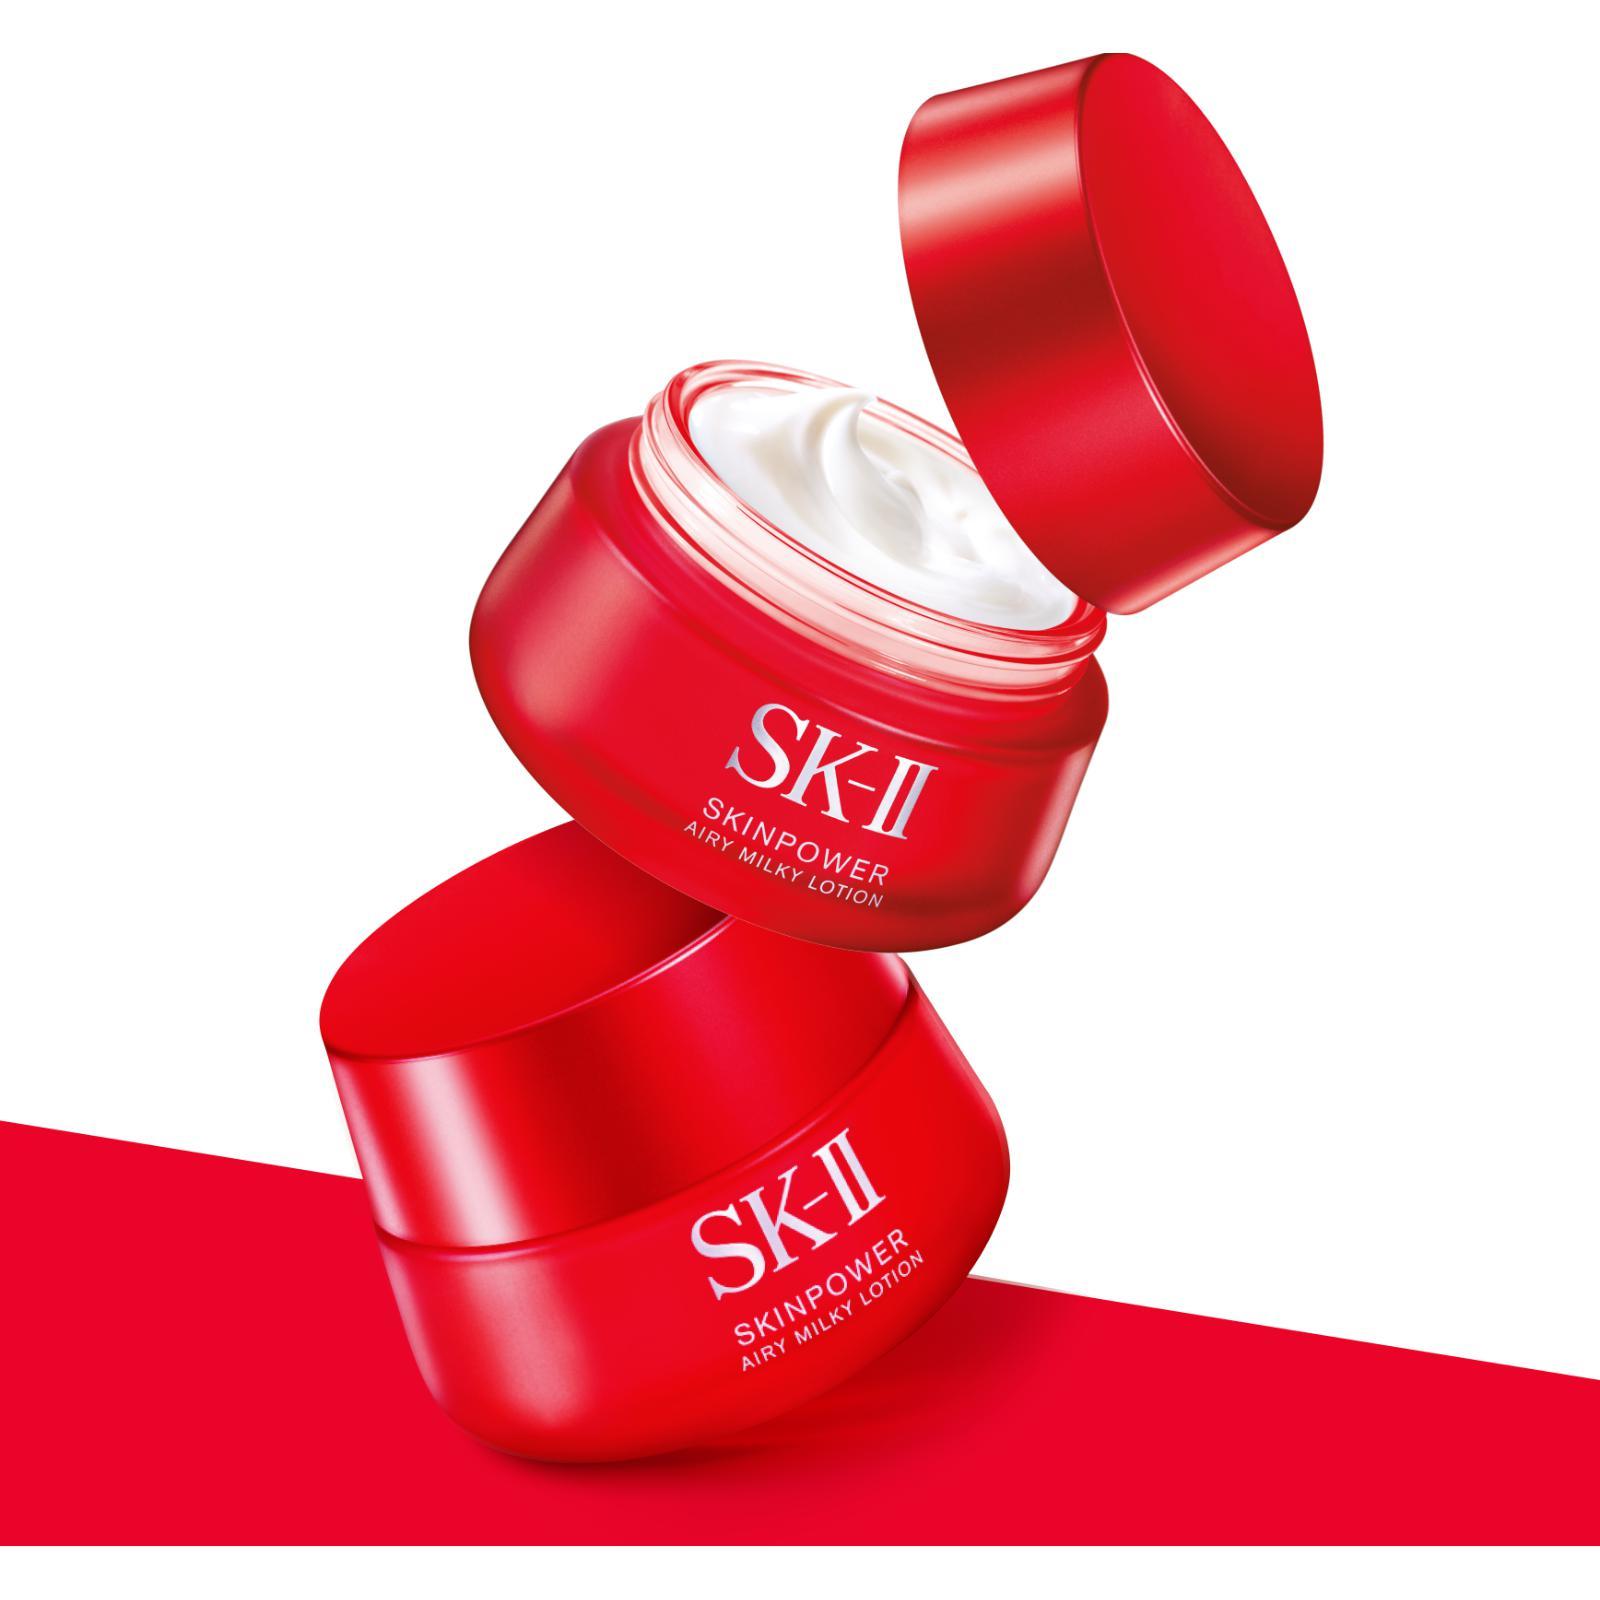 SK-II Skin Power Airy Milky Lotion 50g – Japanese Taste